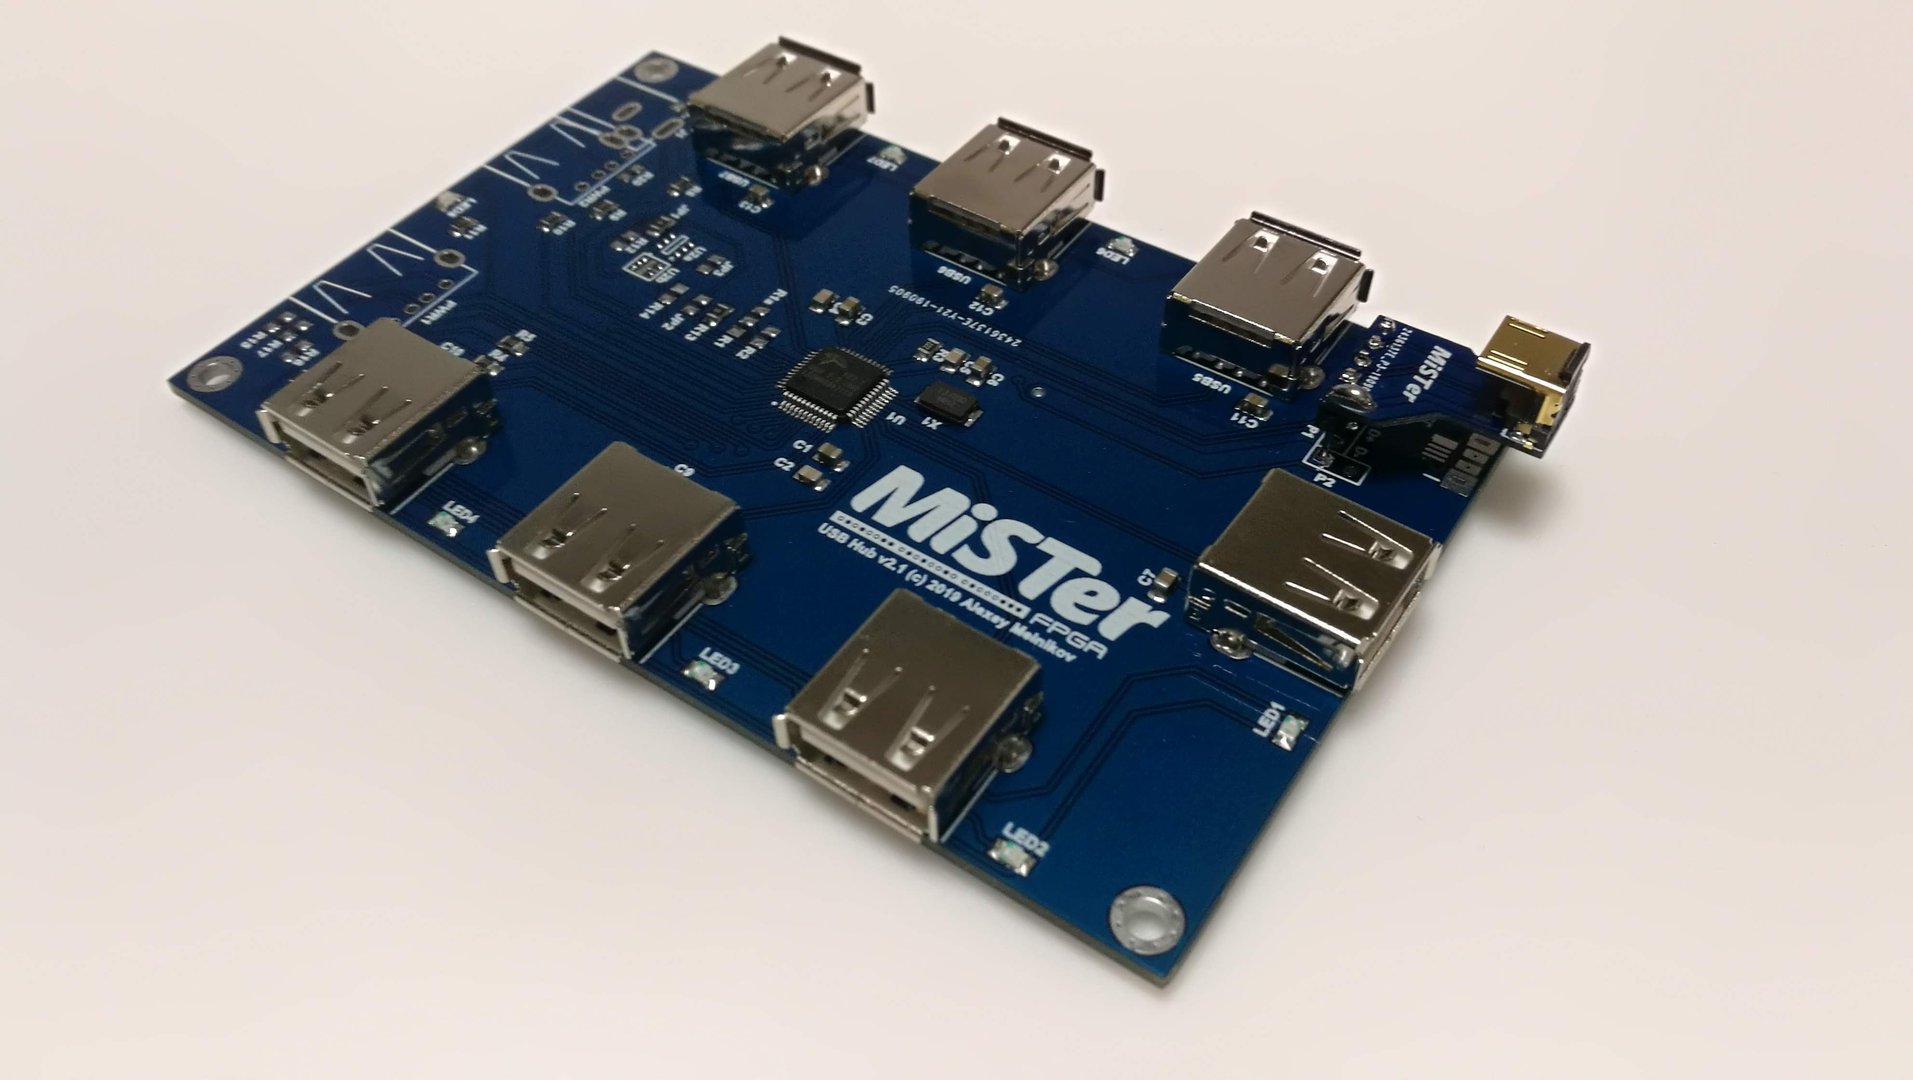 hecho magia mordedura USB hub for MiSTER FPGA. - ManuFerHi